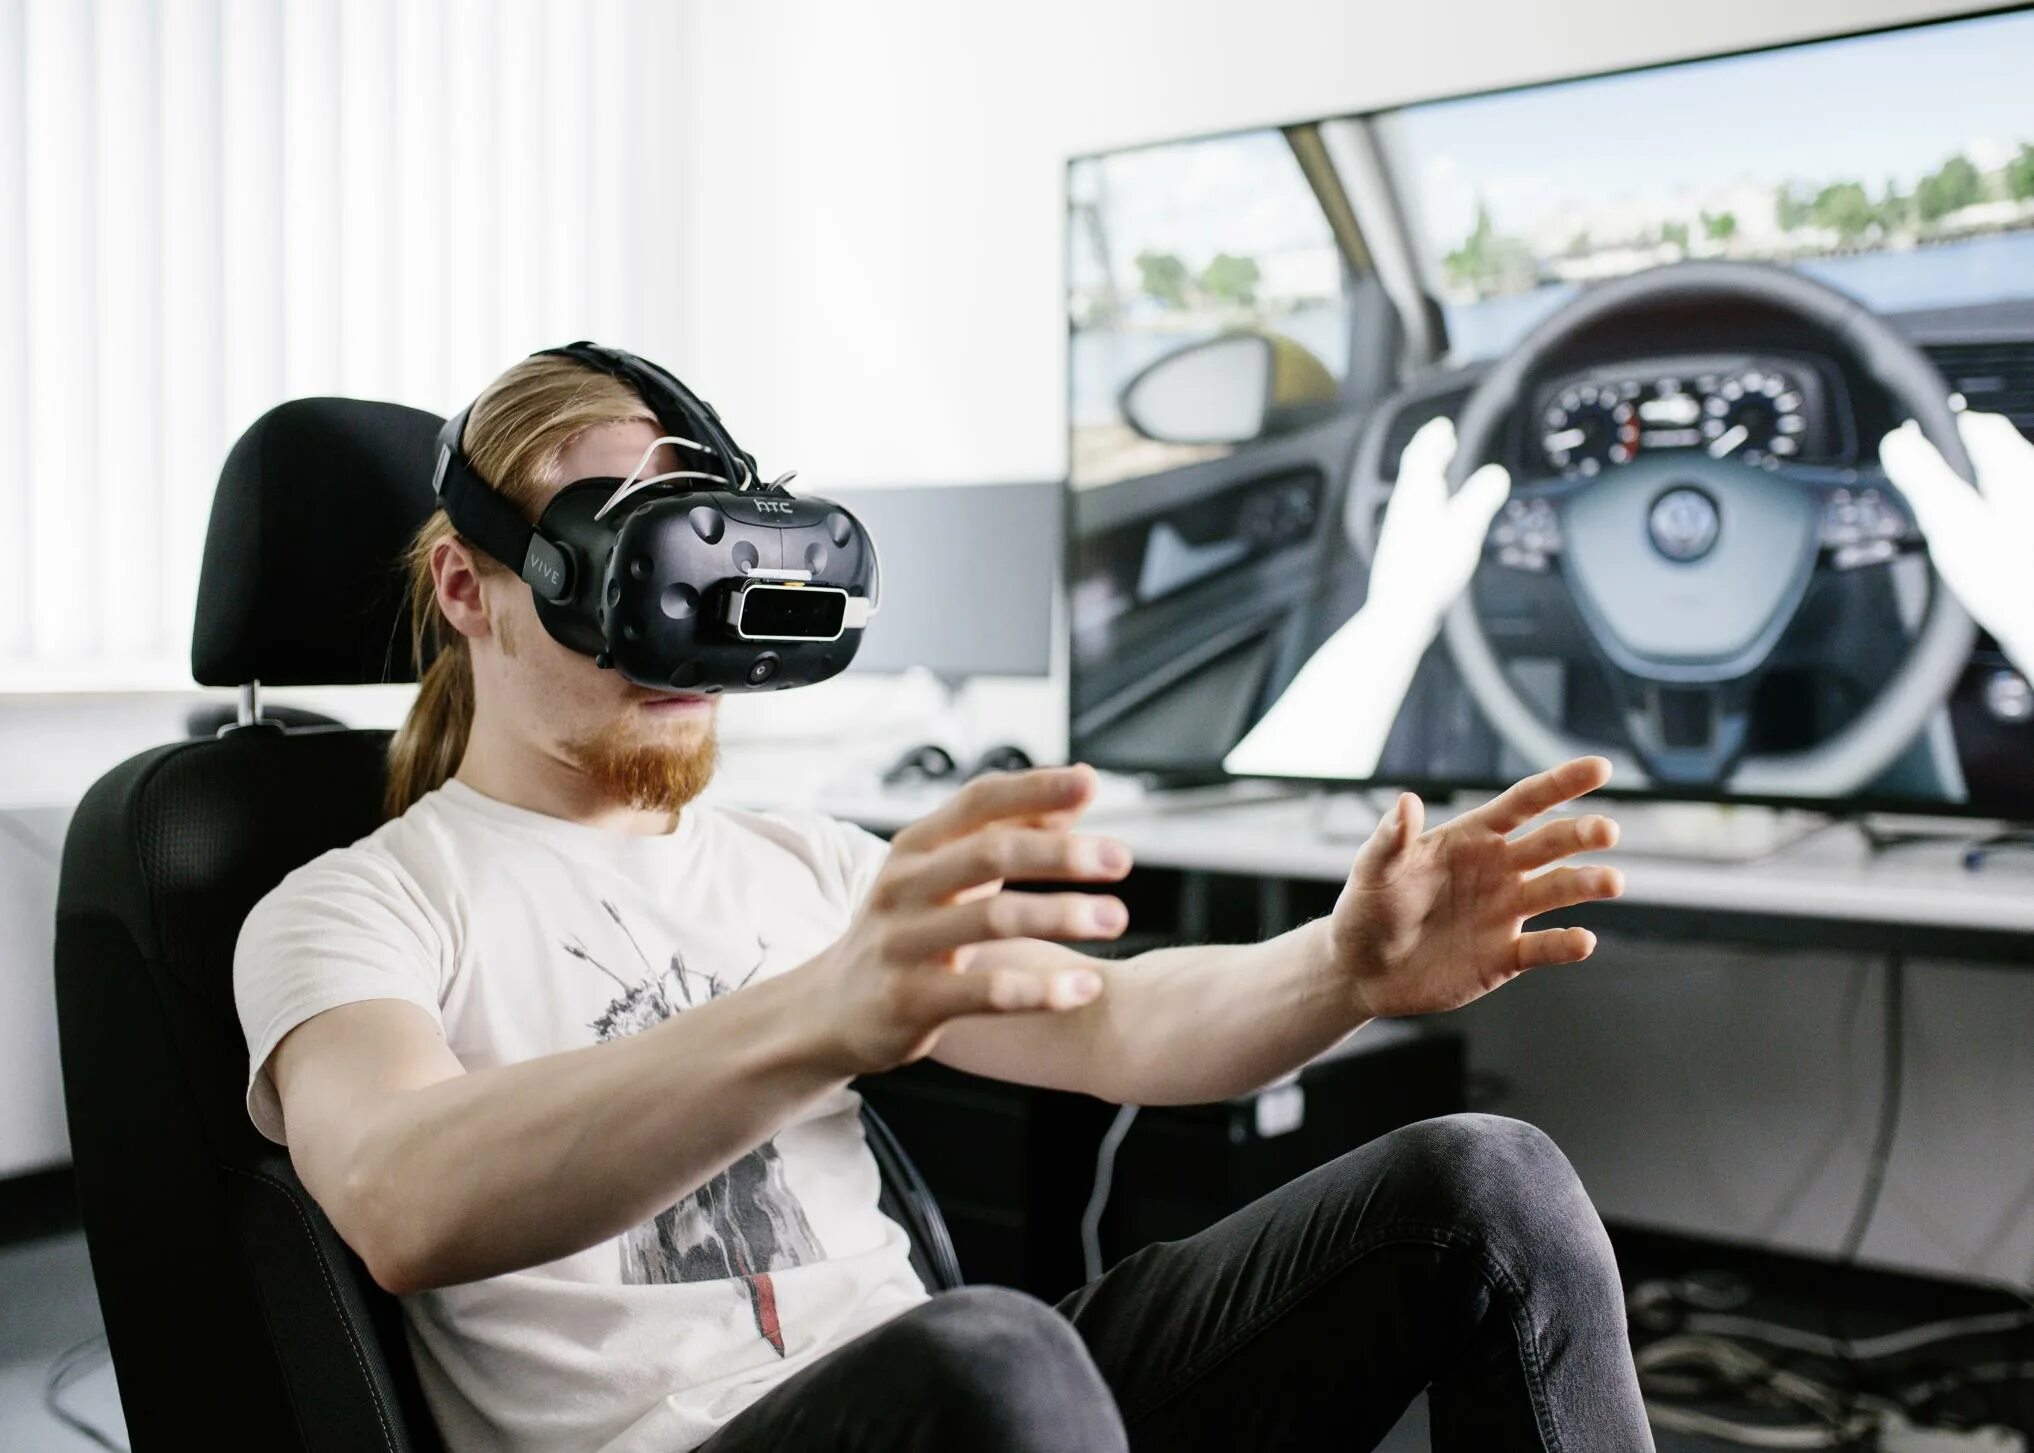 VR 61. VR шлем 360max. VR виртуальная реальность. Виртуальная реальность в будущем.